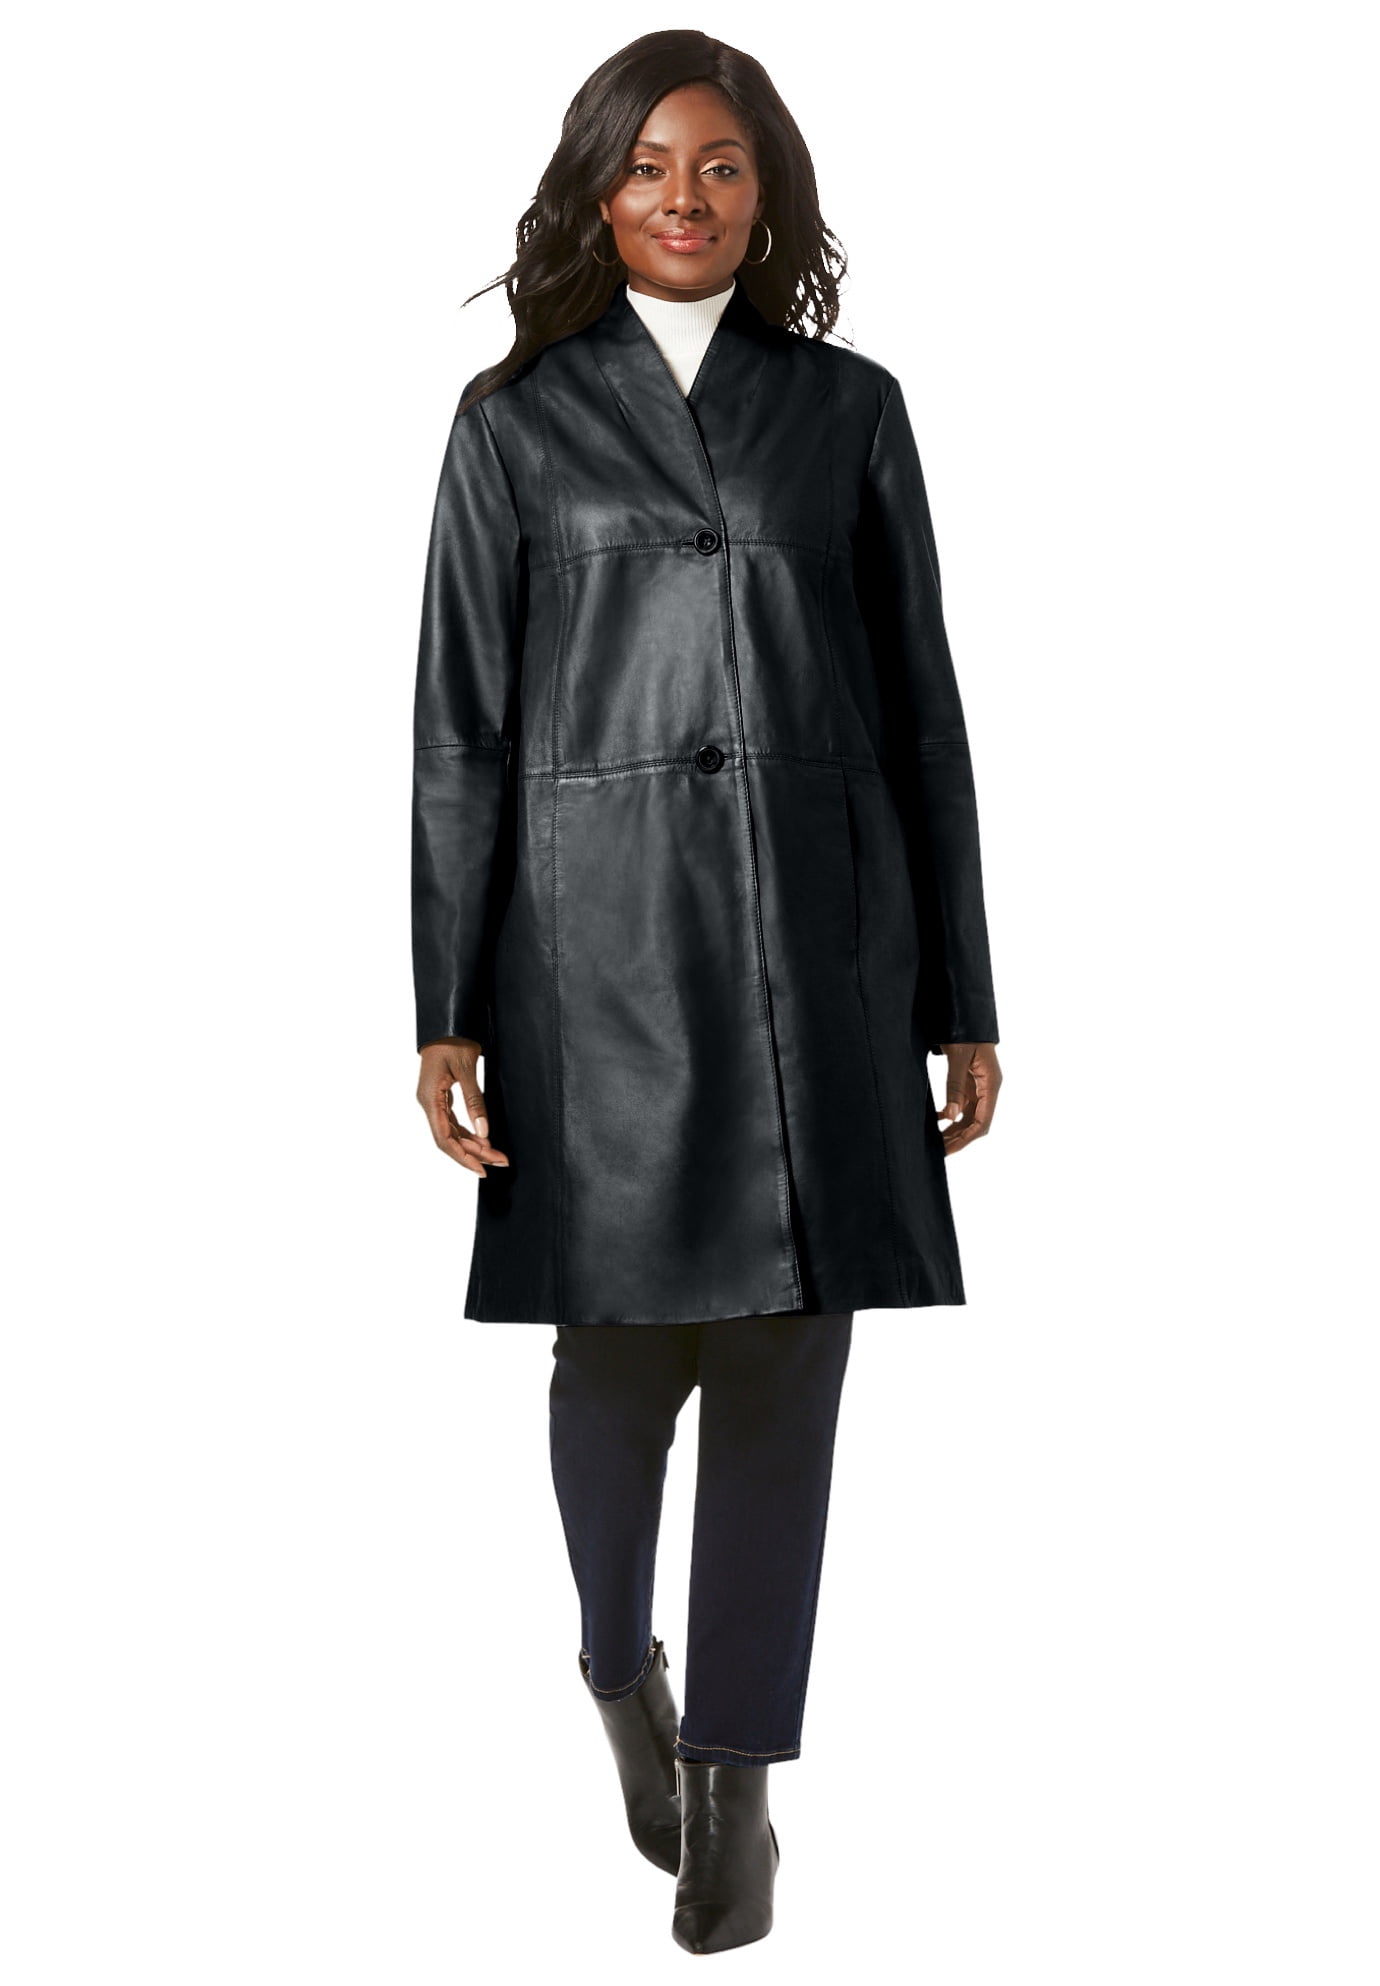 Jessica London Women's Plus Size Leather Coat Leather Jacket - Walmart.com